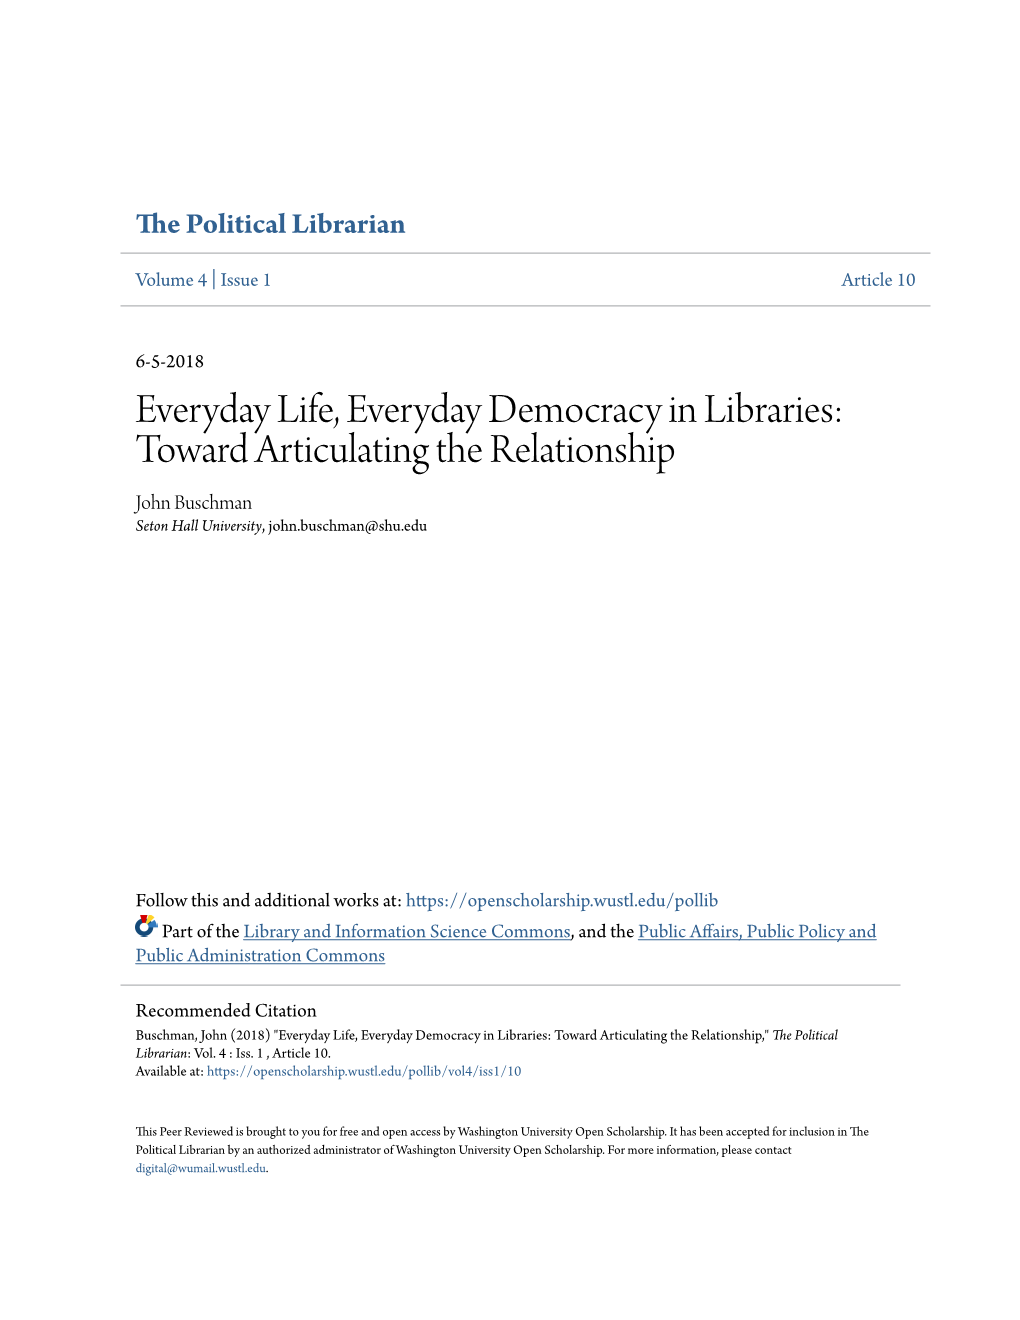 Everyday Life, Everyday Democracy in Libraries: Toward Articulating the Relationship John Buschman Seton Hall University, John.Buschman@Shu.Edu